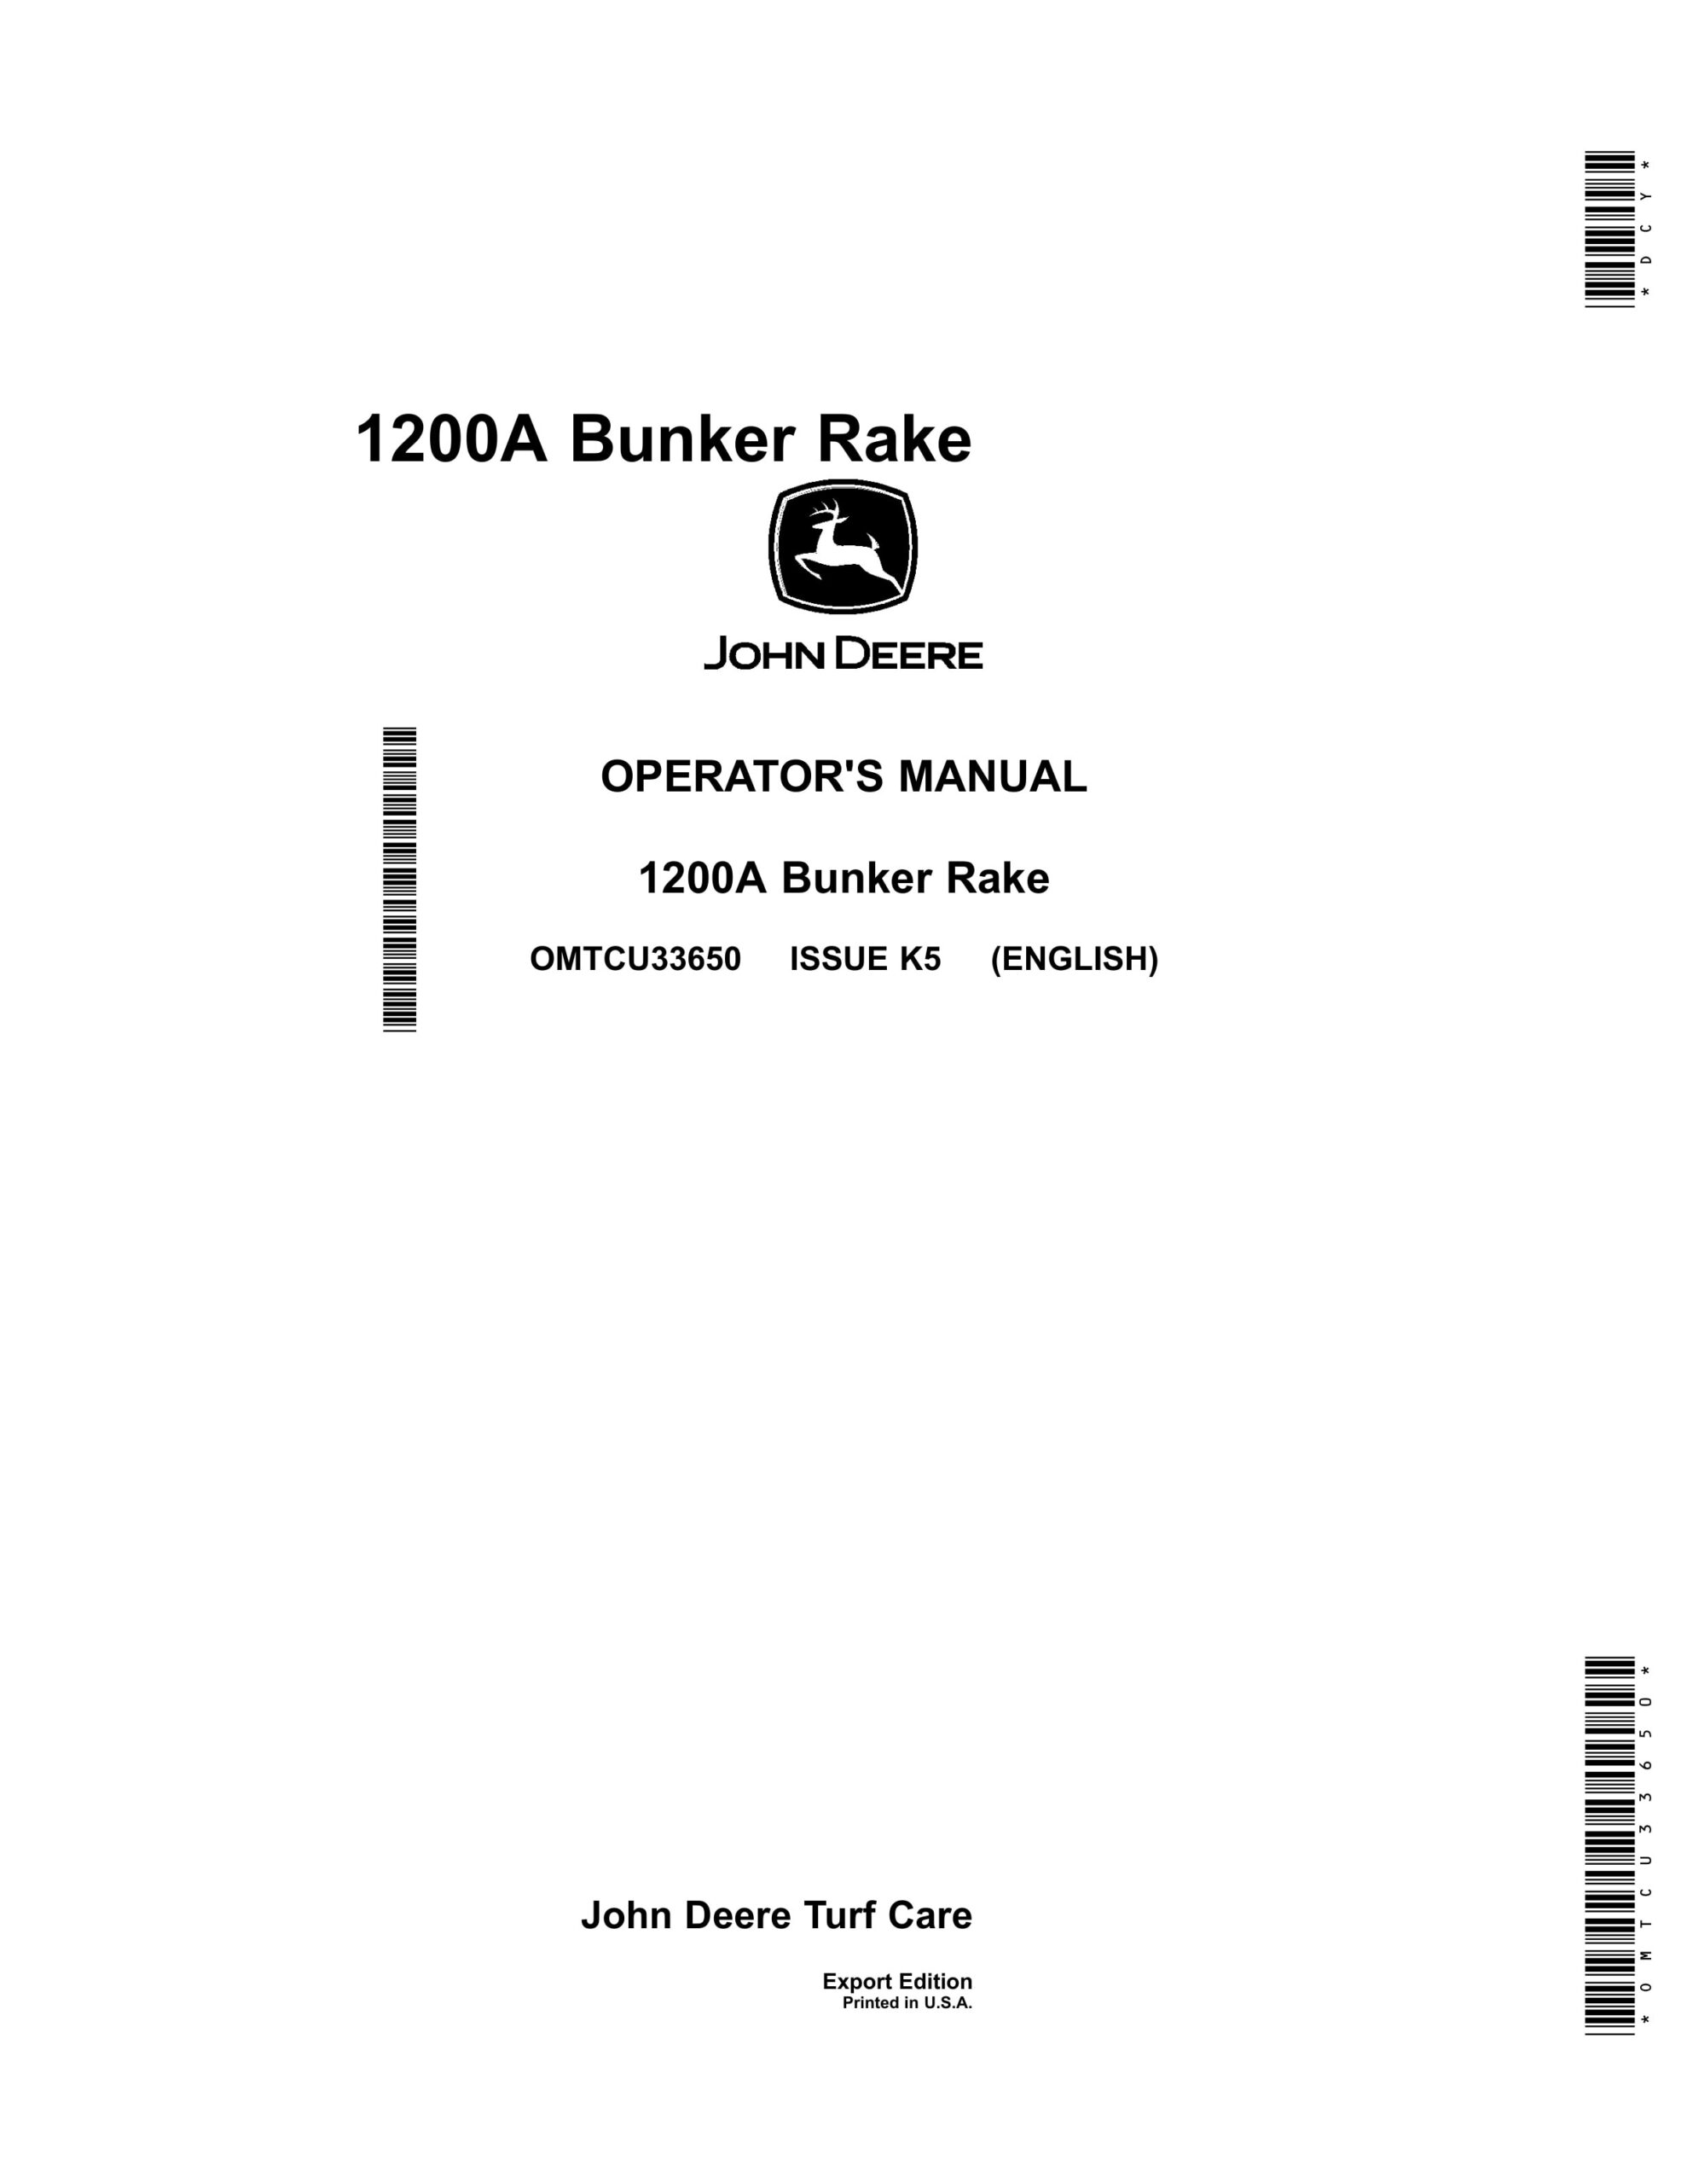 John Deere 1200A Bunker Rakes Operator Manual OMTCU33650-1